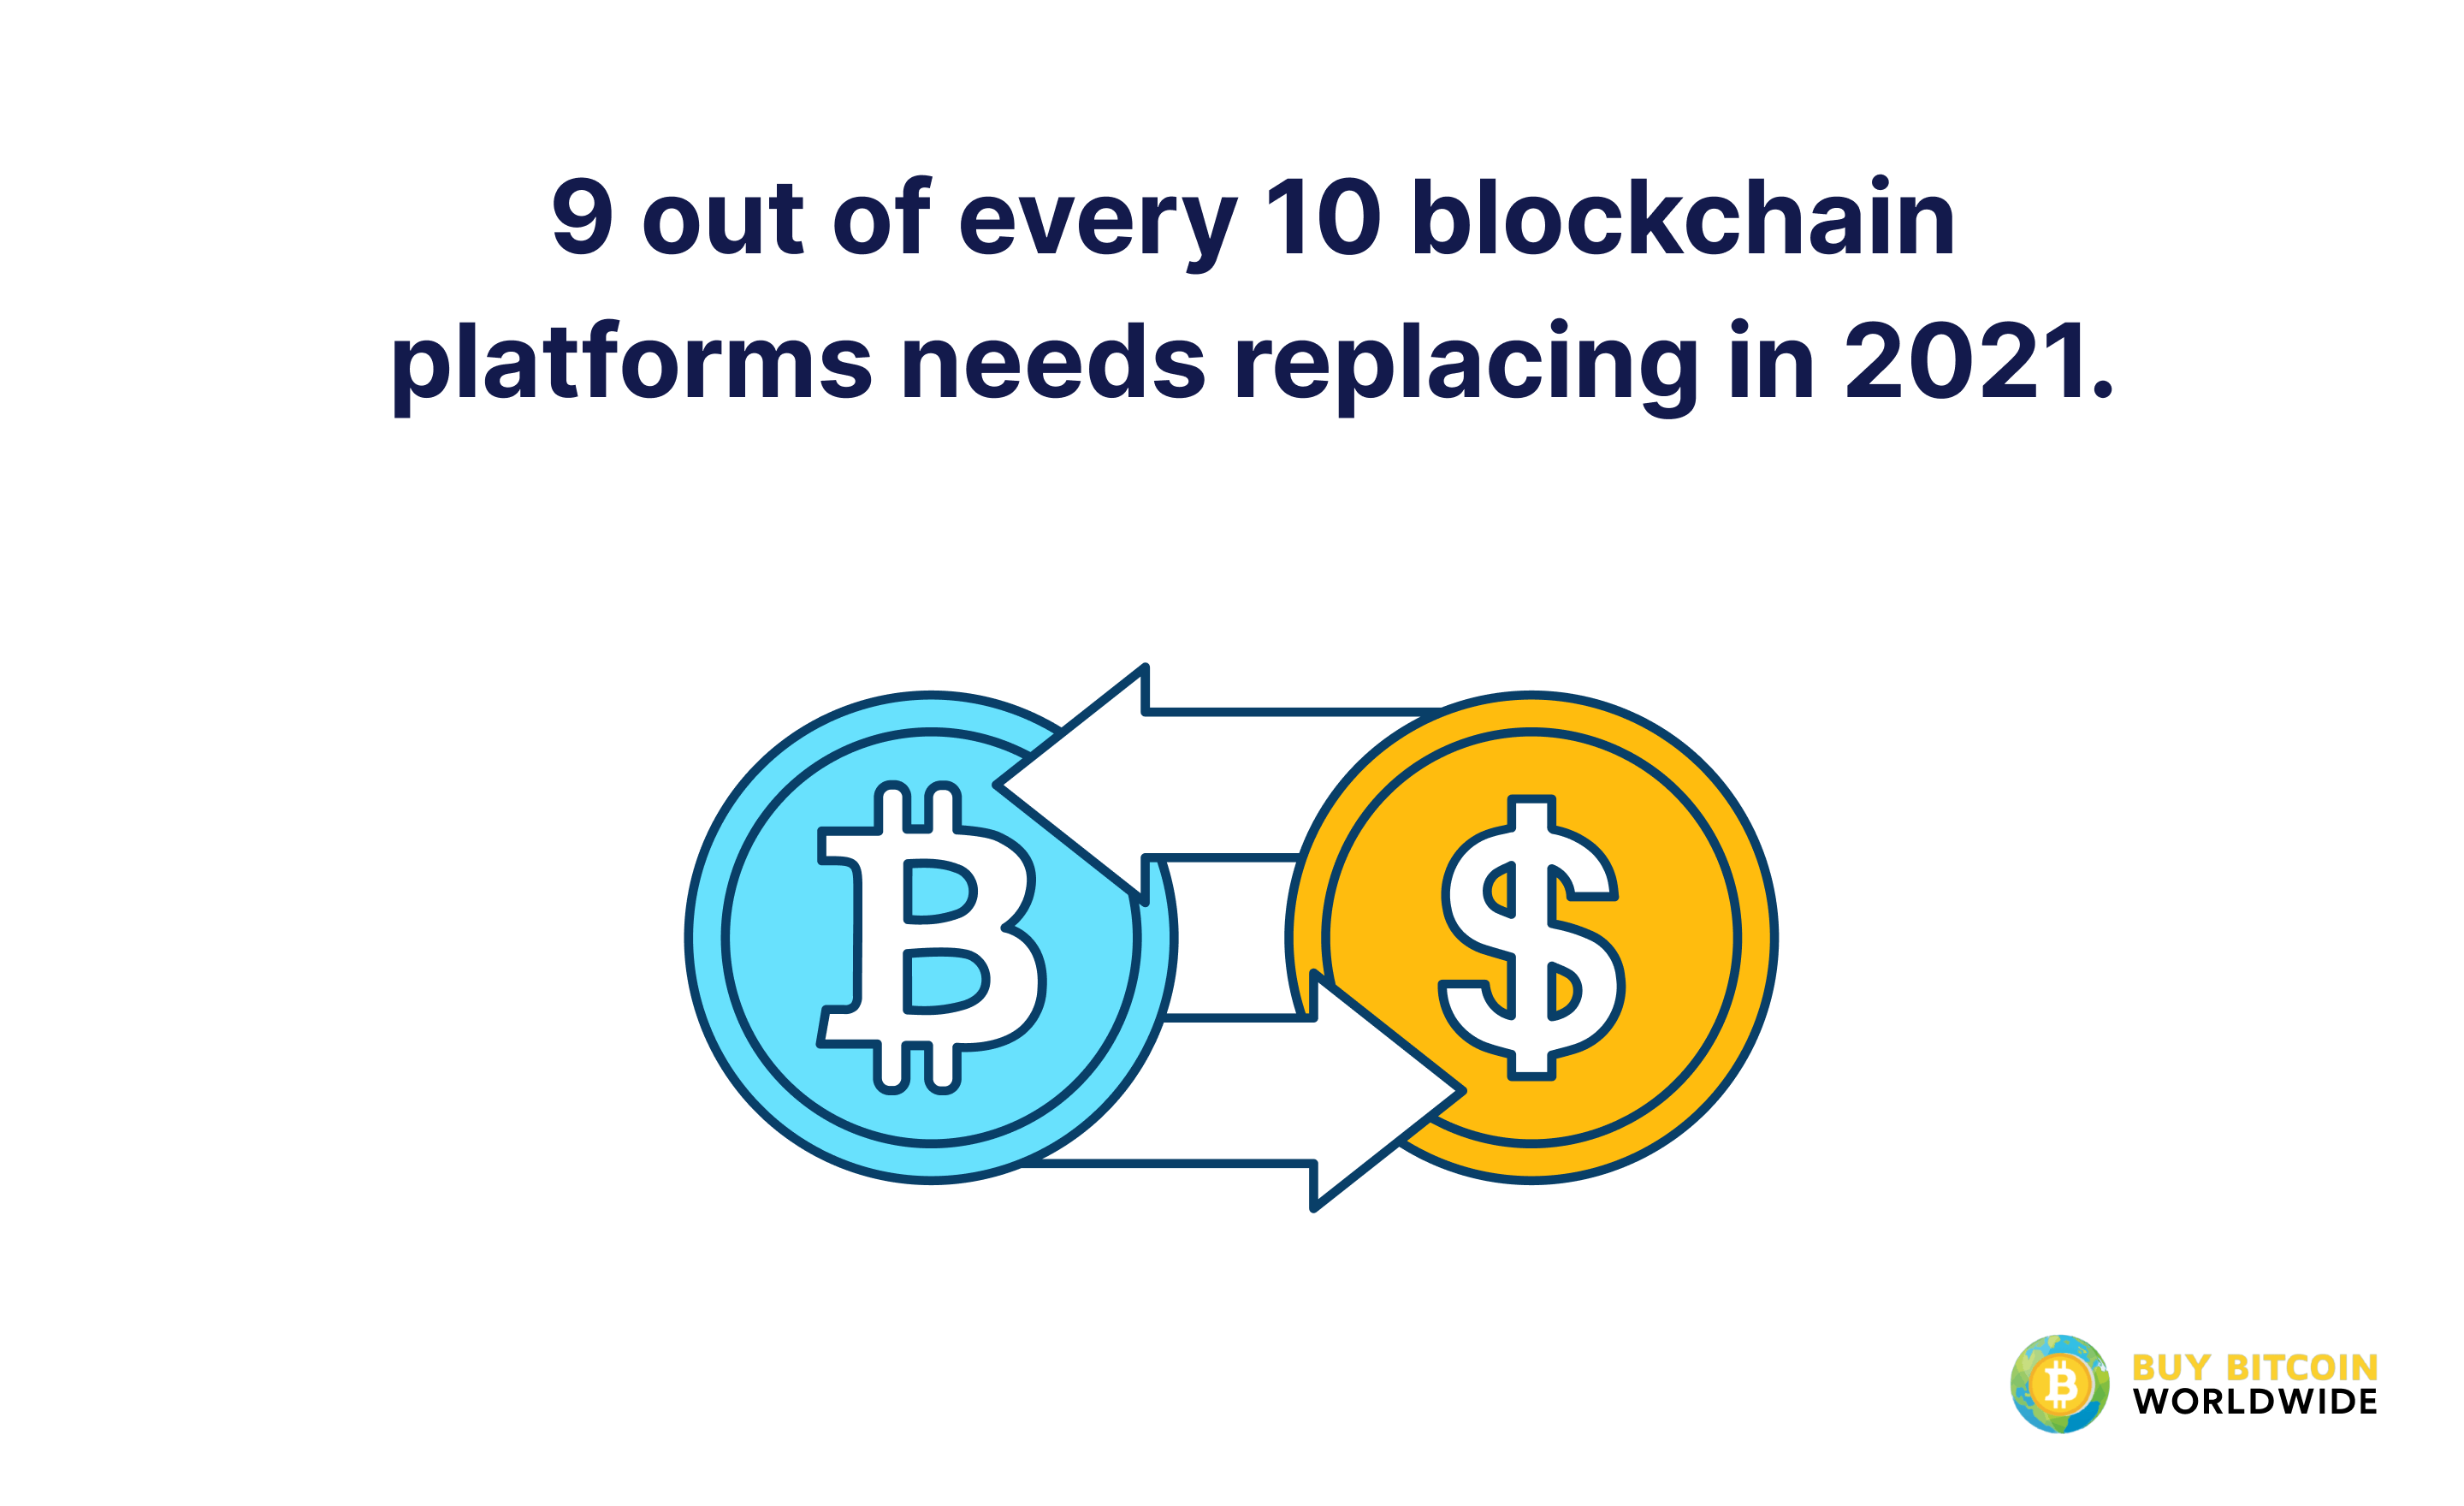 most blockchain platforms need replacing